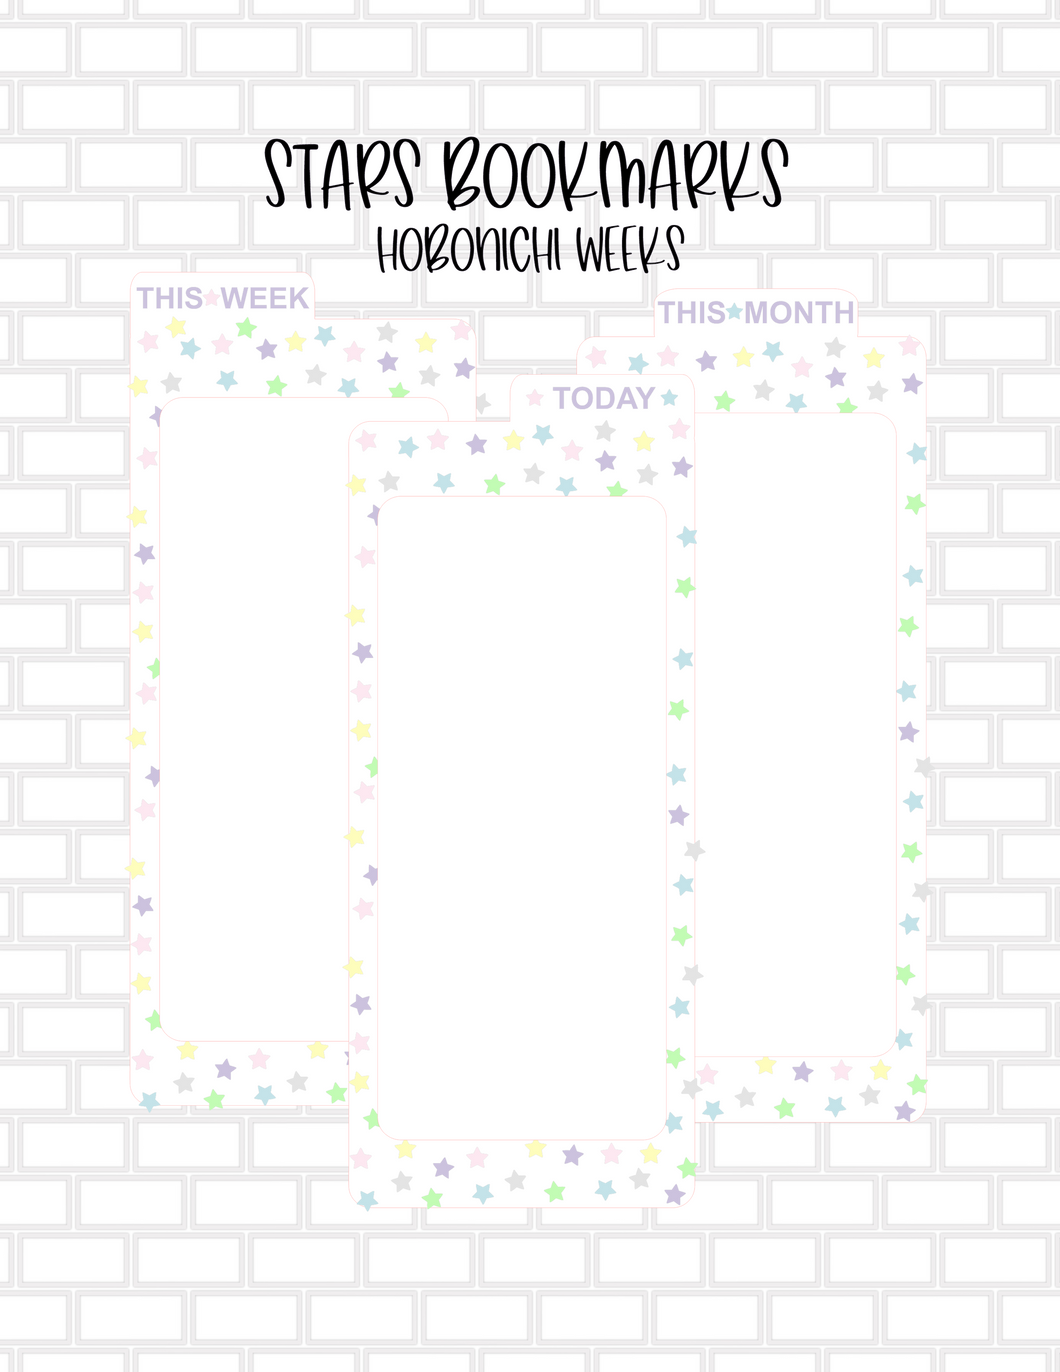 Stars - Hobonichi Weeks - Bookmarks